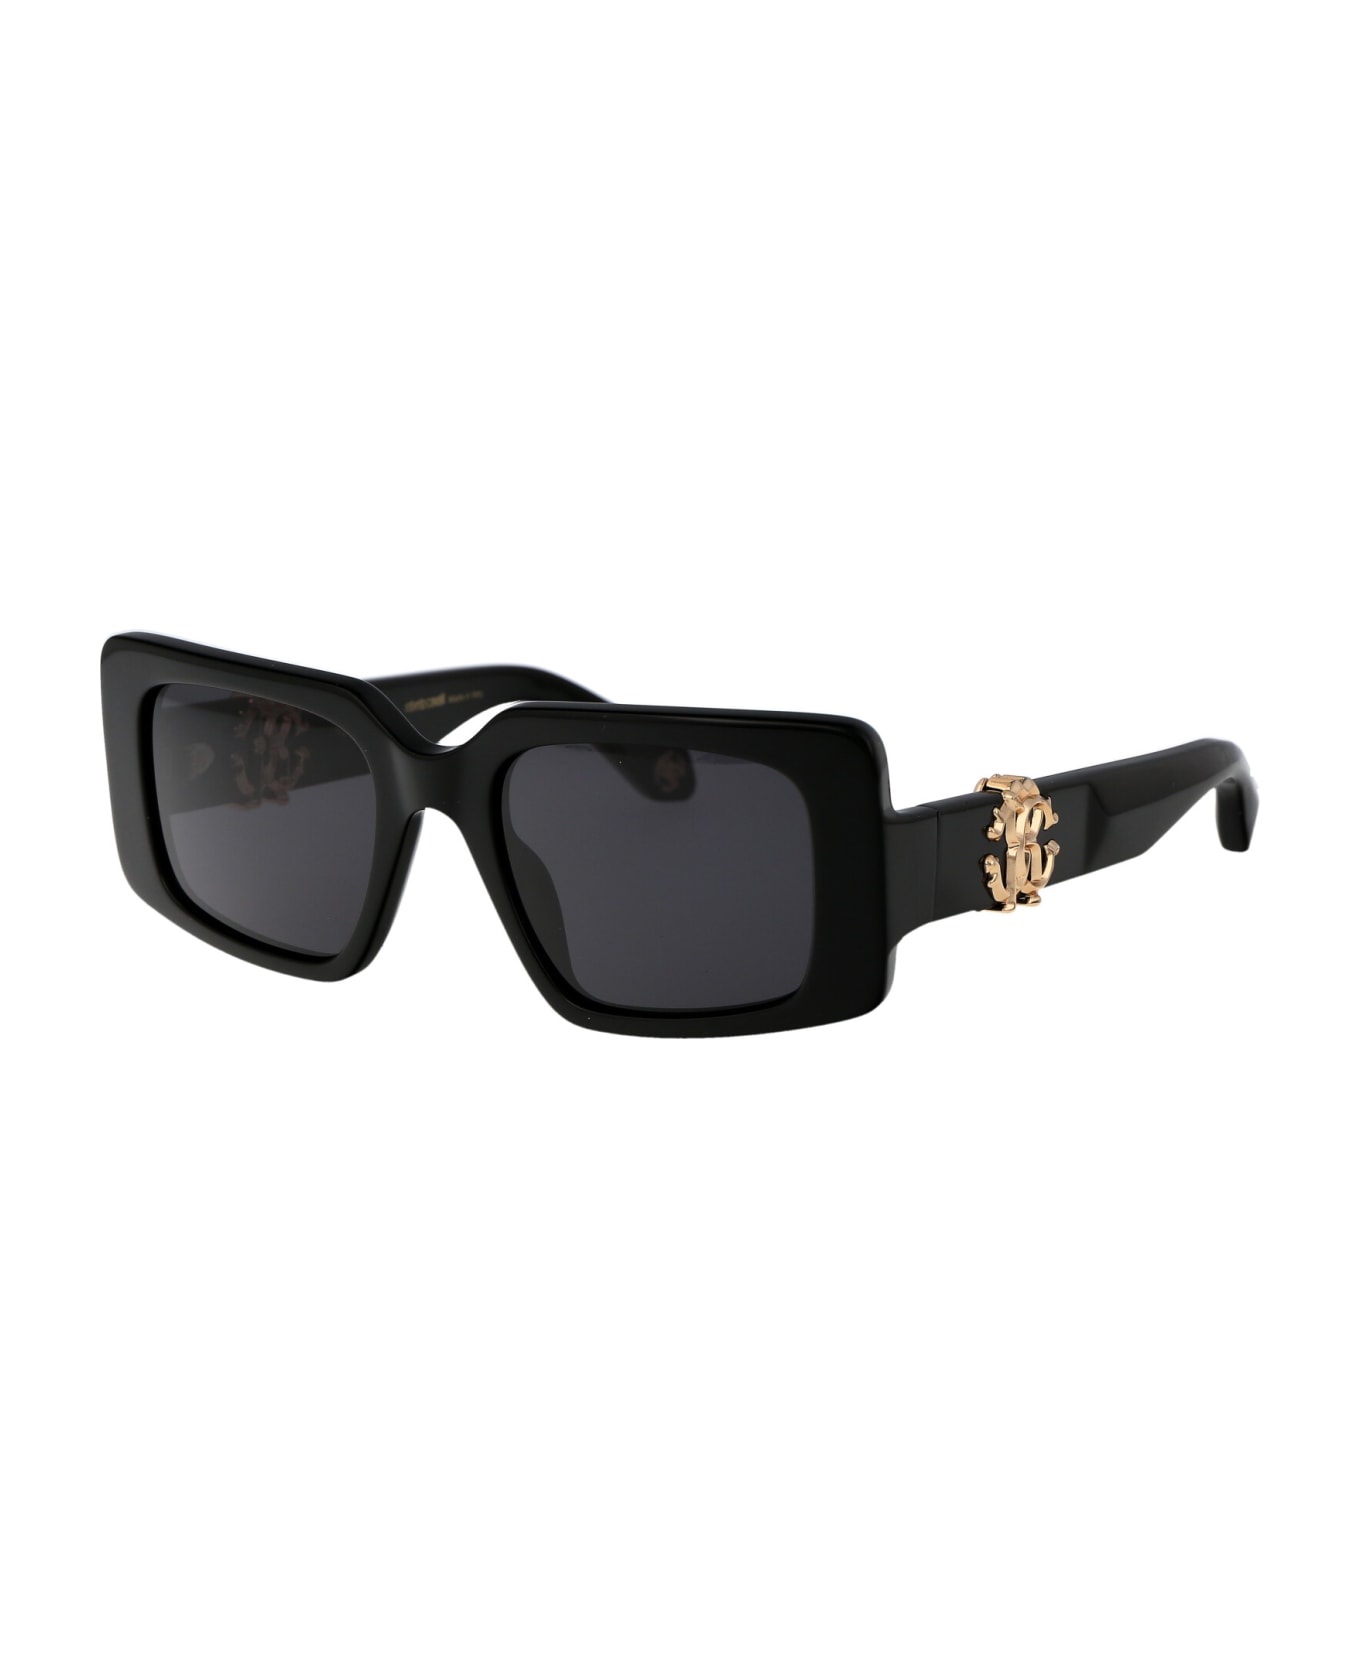 Roberto Cavalli Src039m Sunglasses - 0700 BLACK